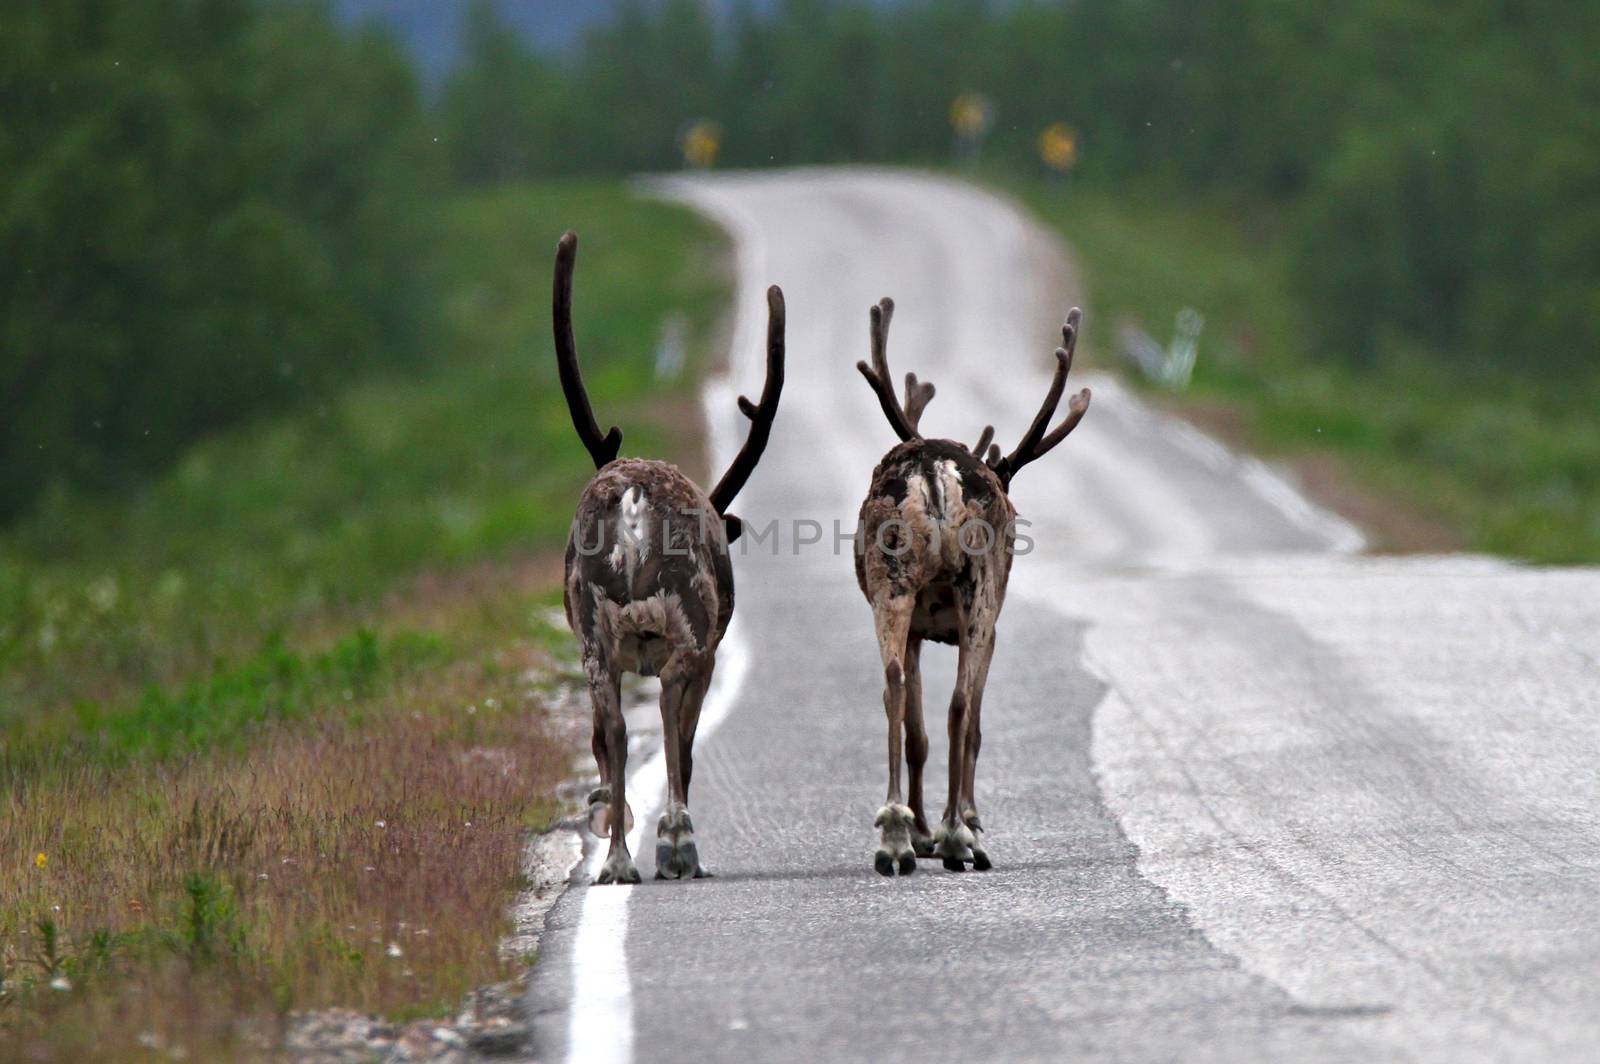 Two Santa's reindeers walking on the road in Finnish Lapland.